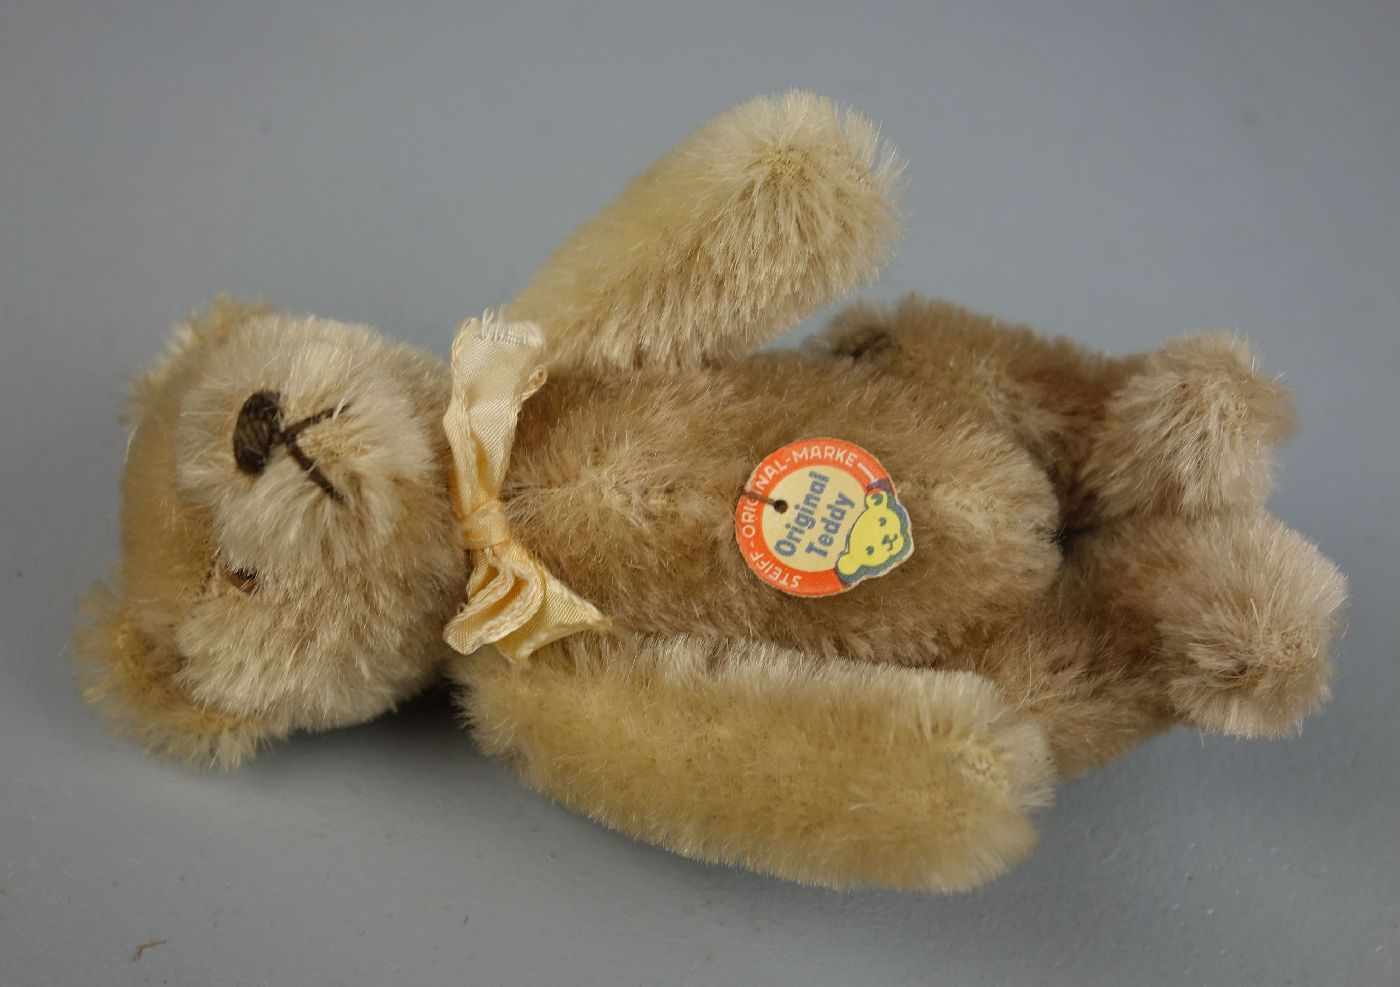 PLÜSCHTIERE / PLÜSCHFIGUREN: 3 Steiff-Teddys / Teddybären / teddy bears, 20. Jh., Manufaktur Steiff. - Image 10 of 11